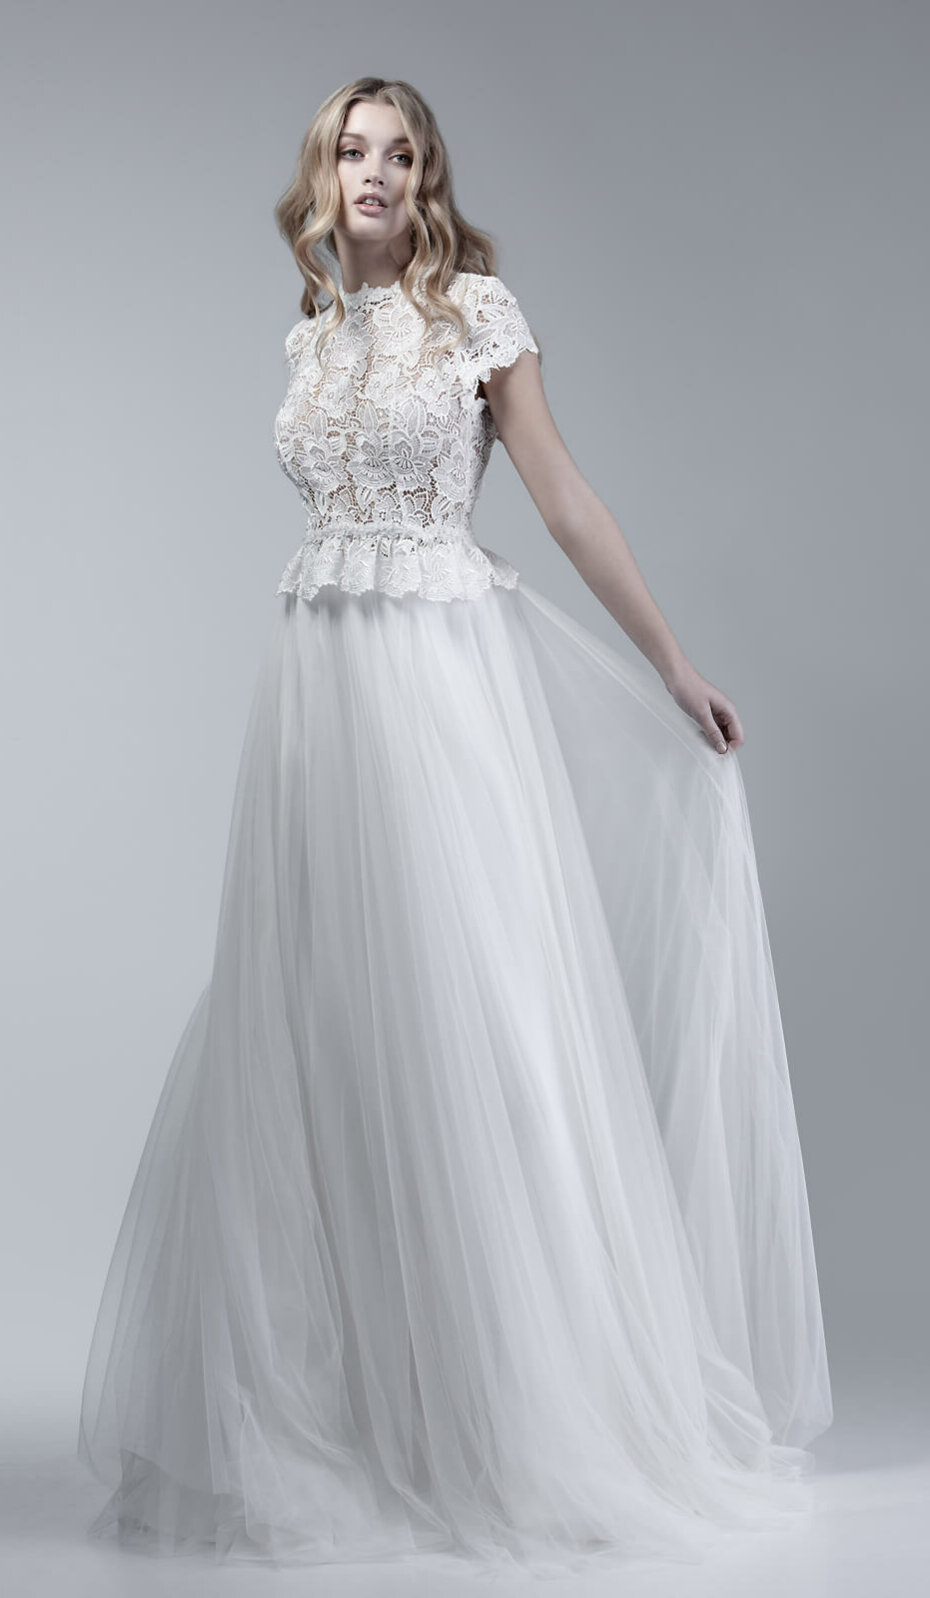 angelika dluzen bridal skirt collection couture stuen brude nederdele